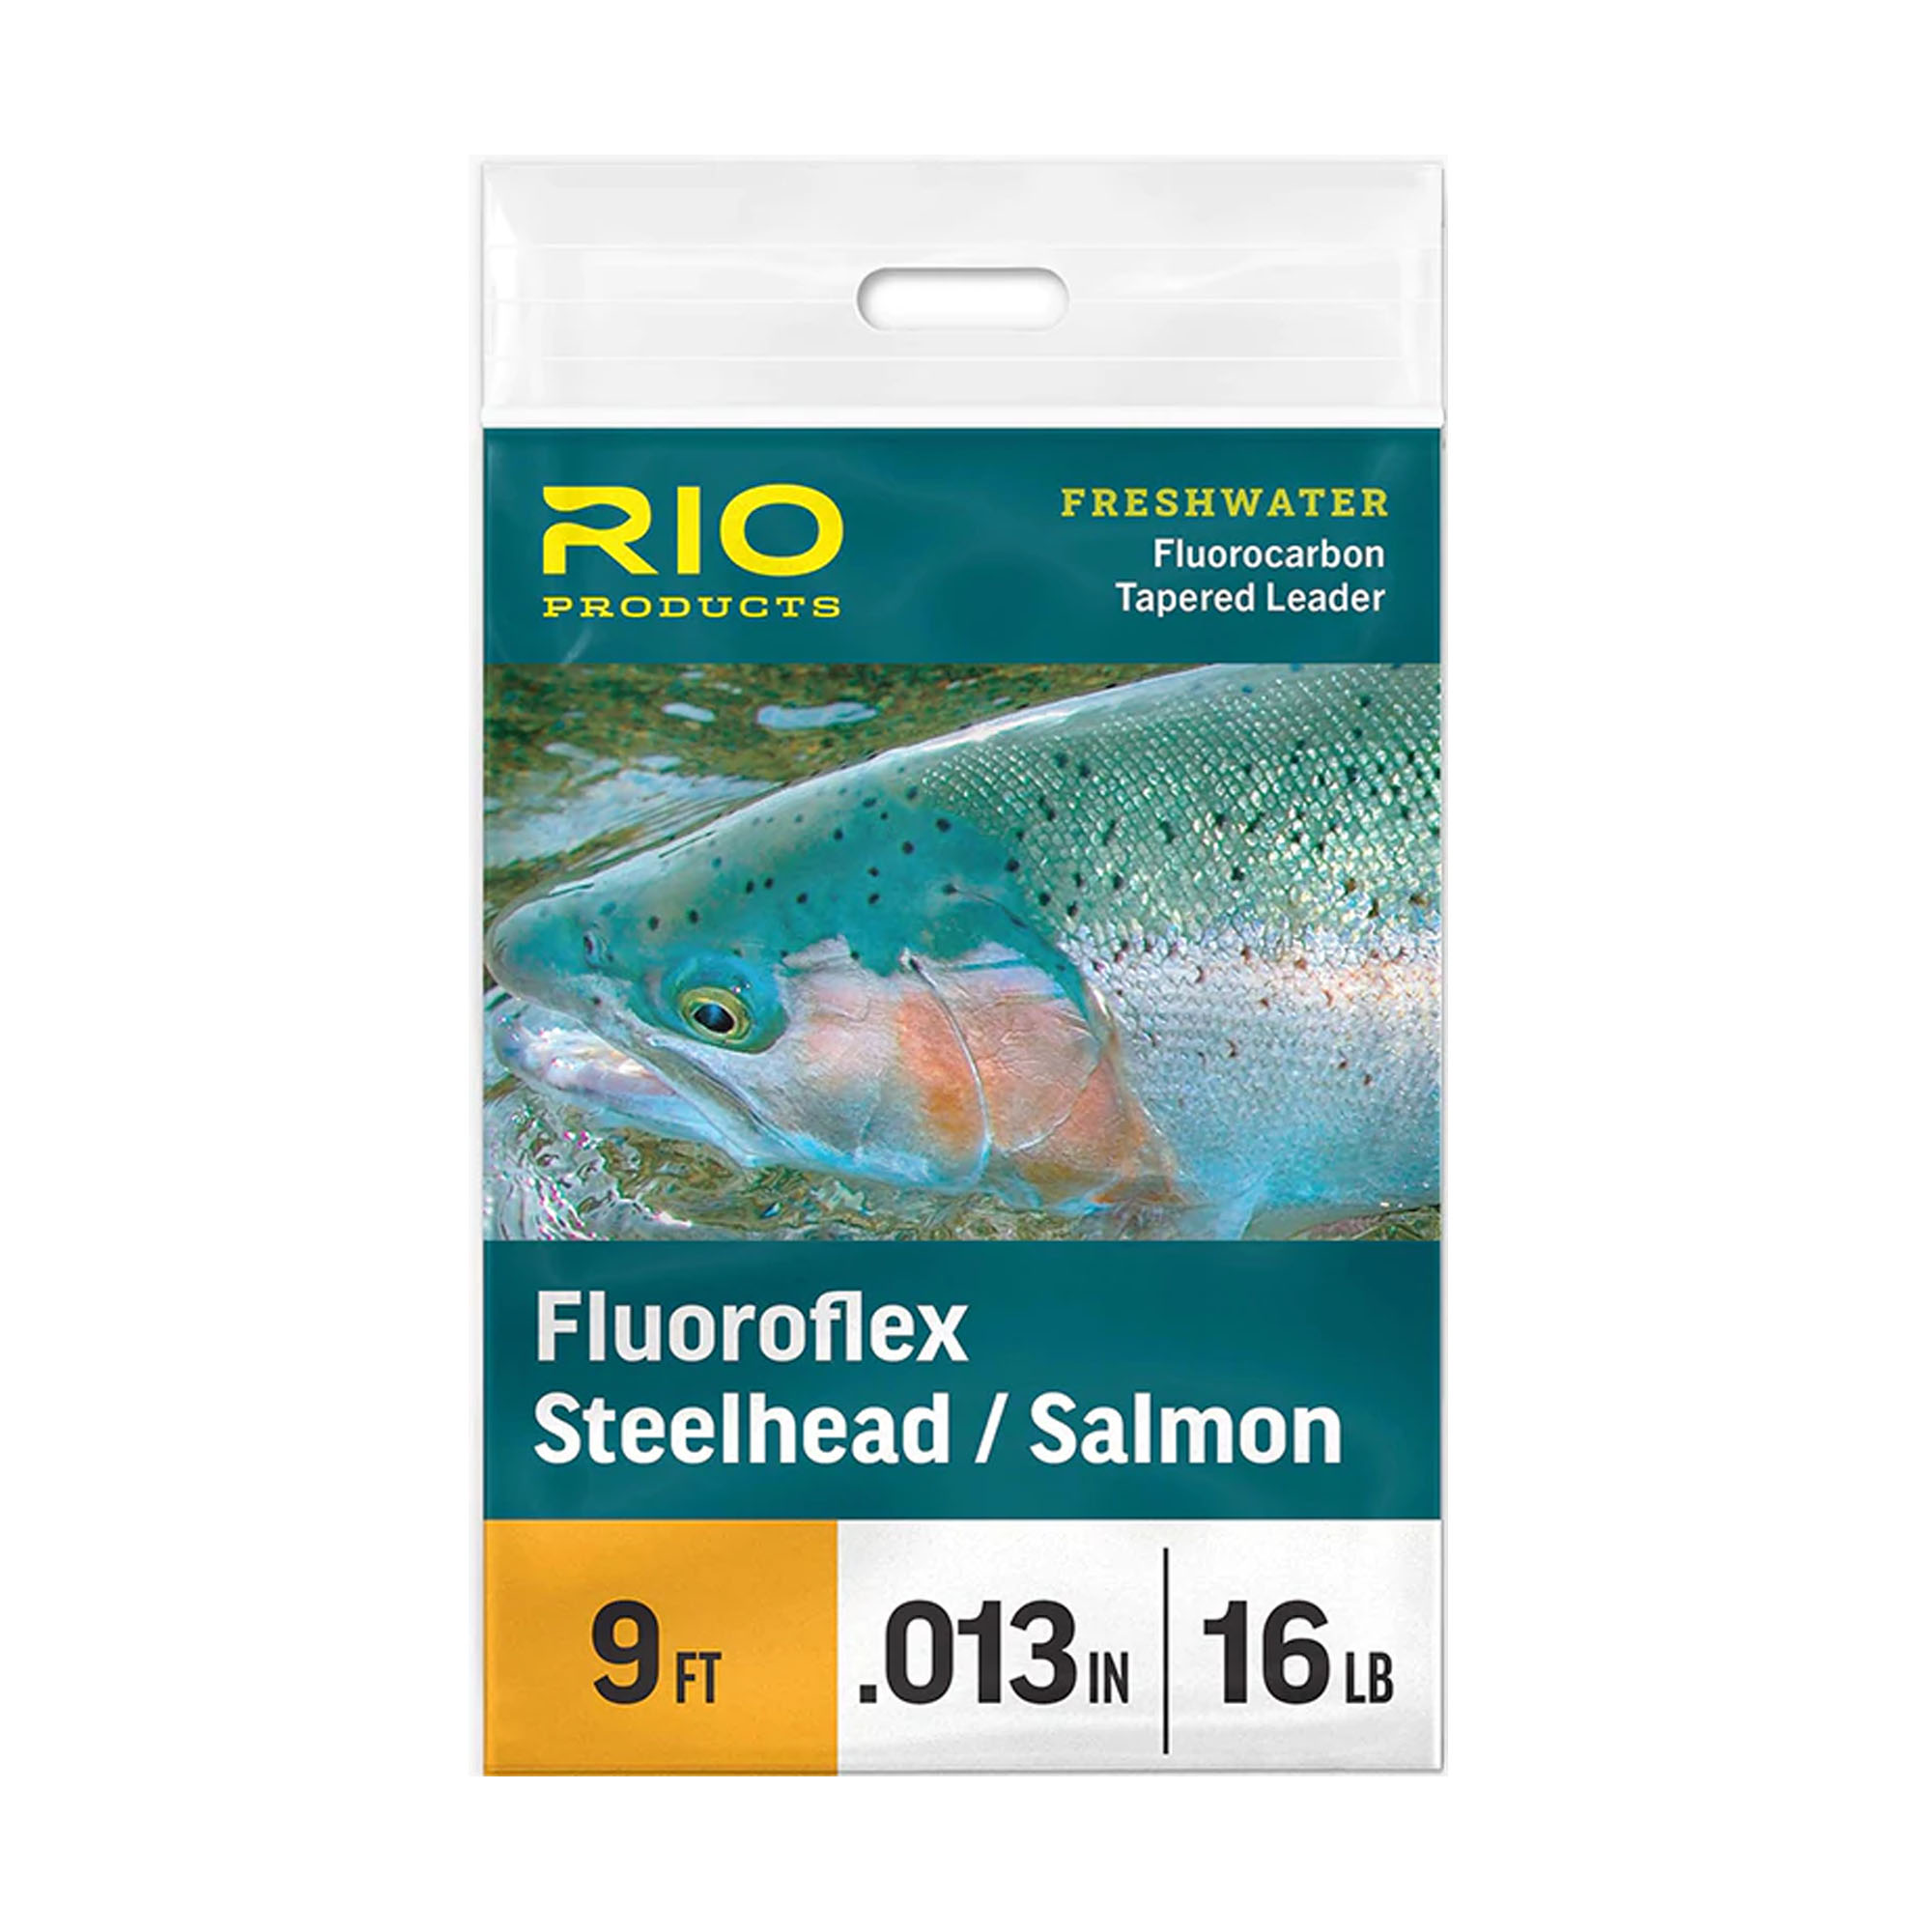 RIO Fluoroflex Steelhead/Salmon Leaders – Guide Flyfishing